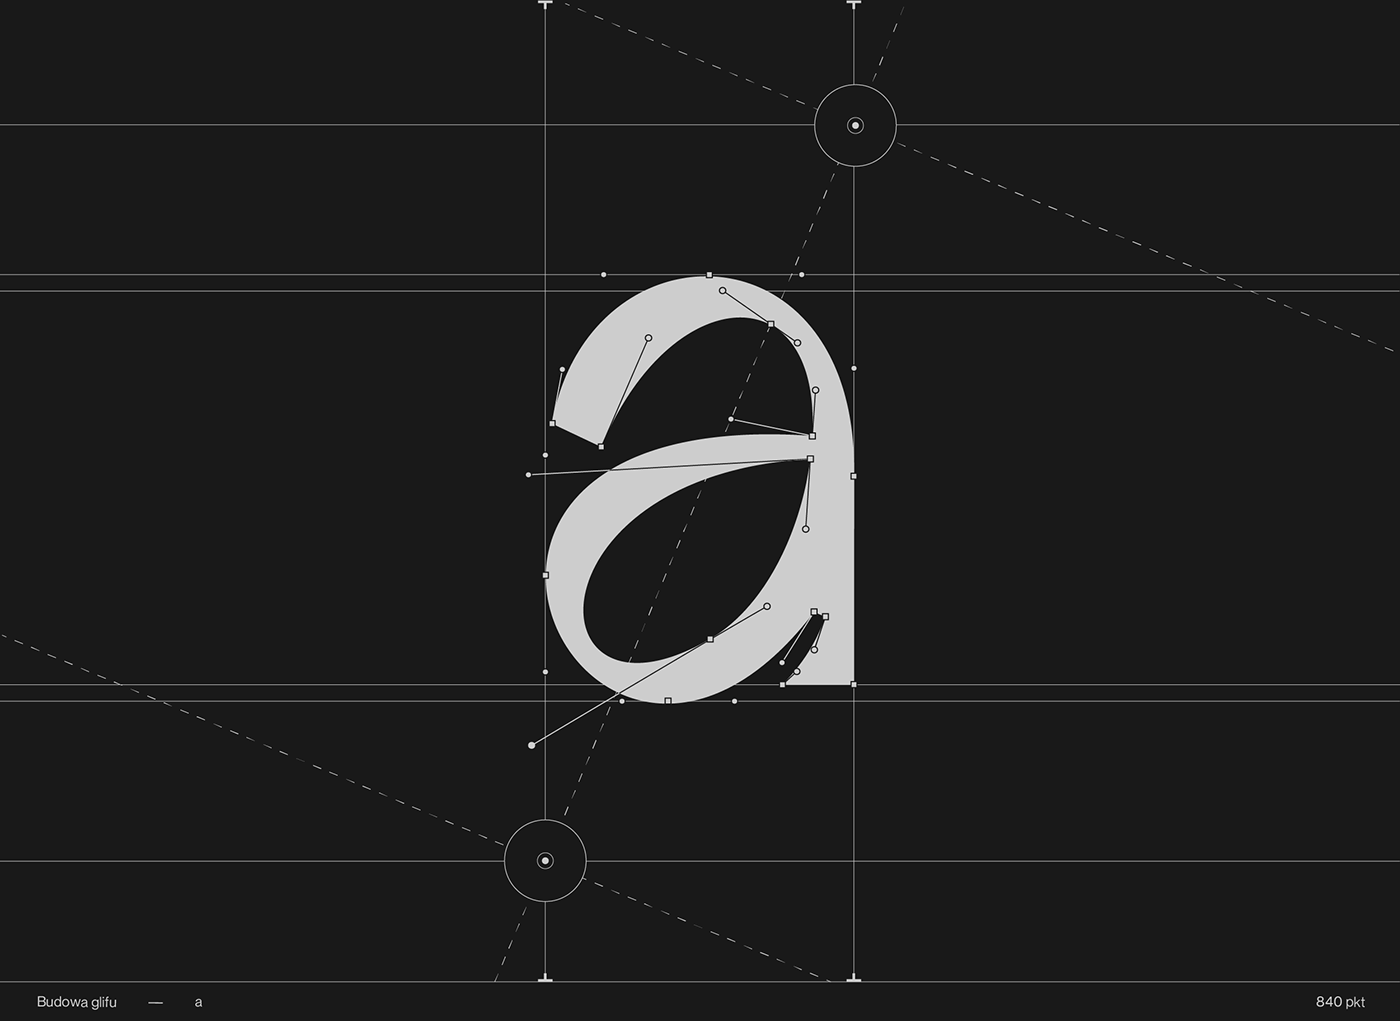 art font graphic design  type type design Typeface typography  